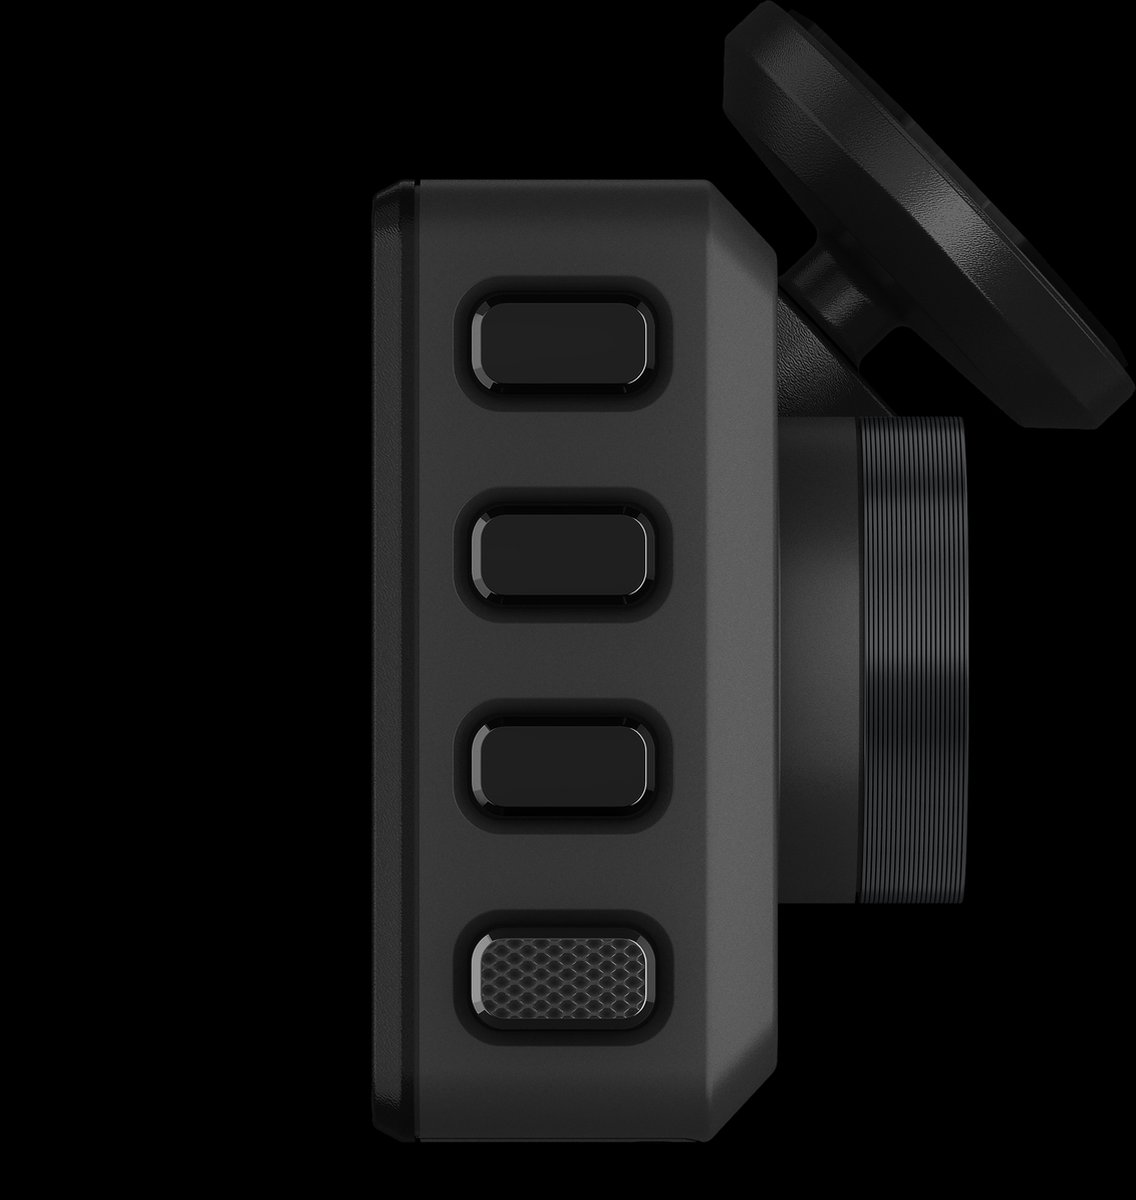 Garmin Dash Cam™ Live  Caméra embarquée pour voiture